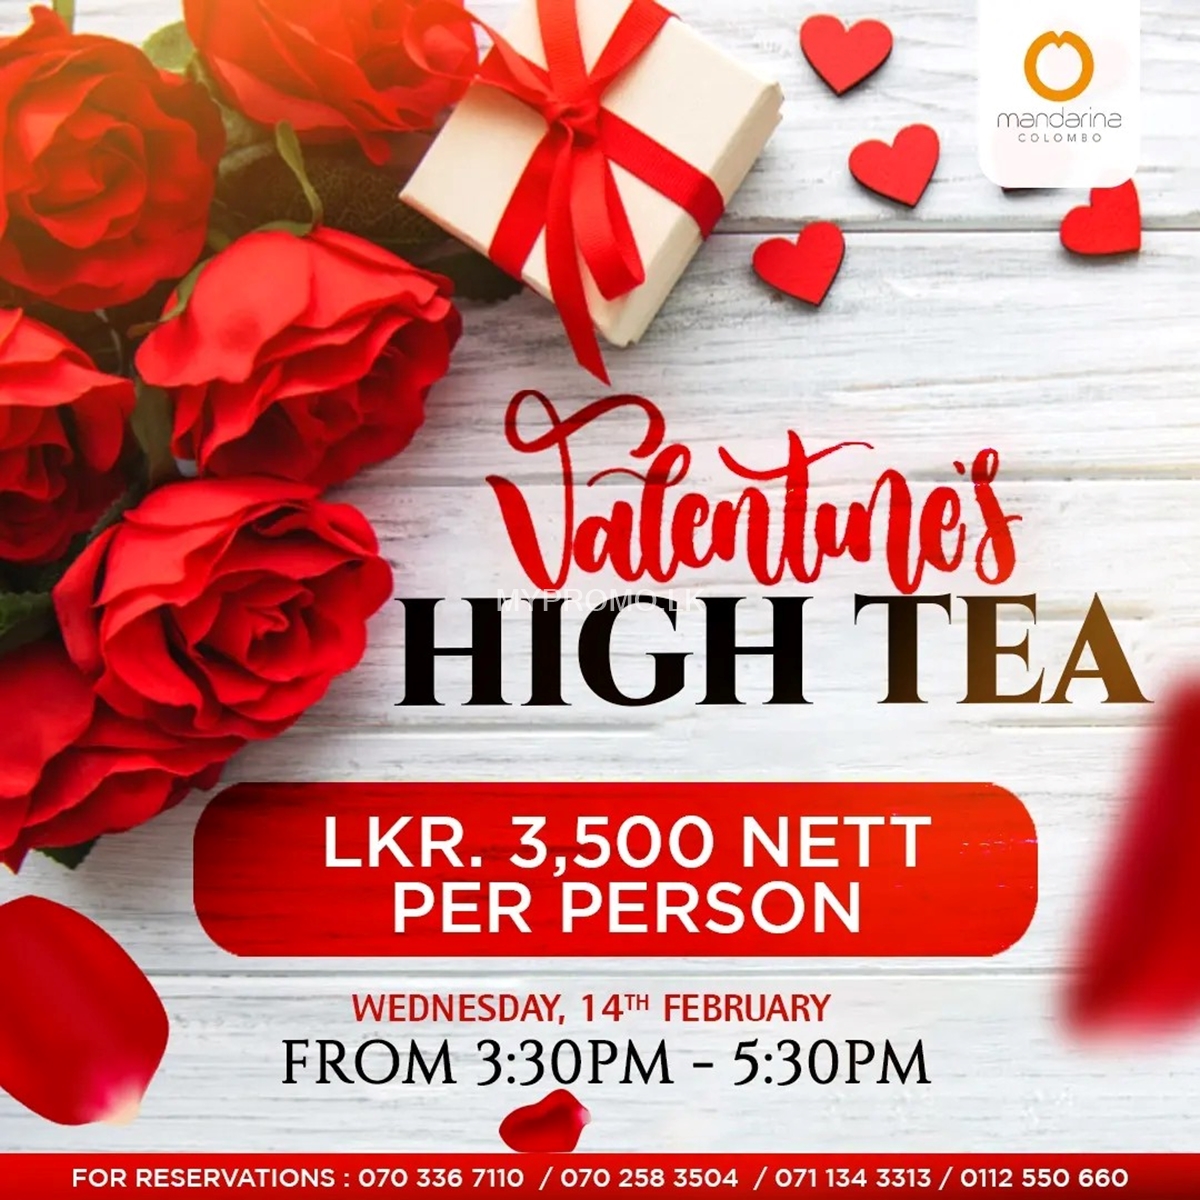 Valentine's High Tea at Mandarina Colombo